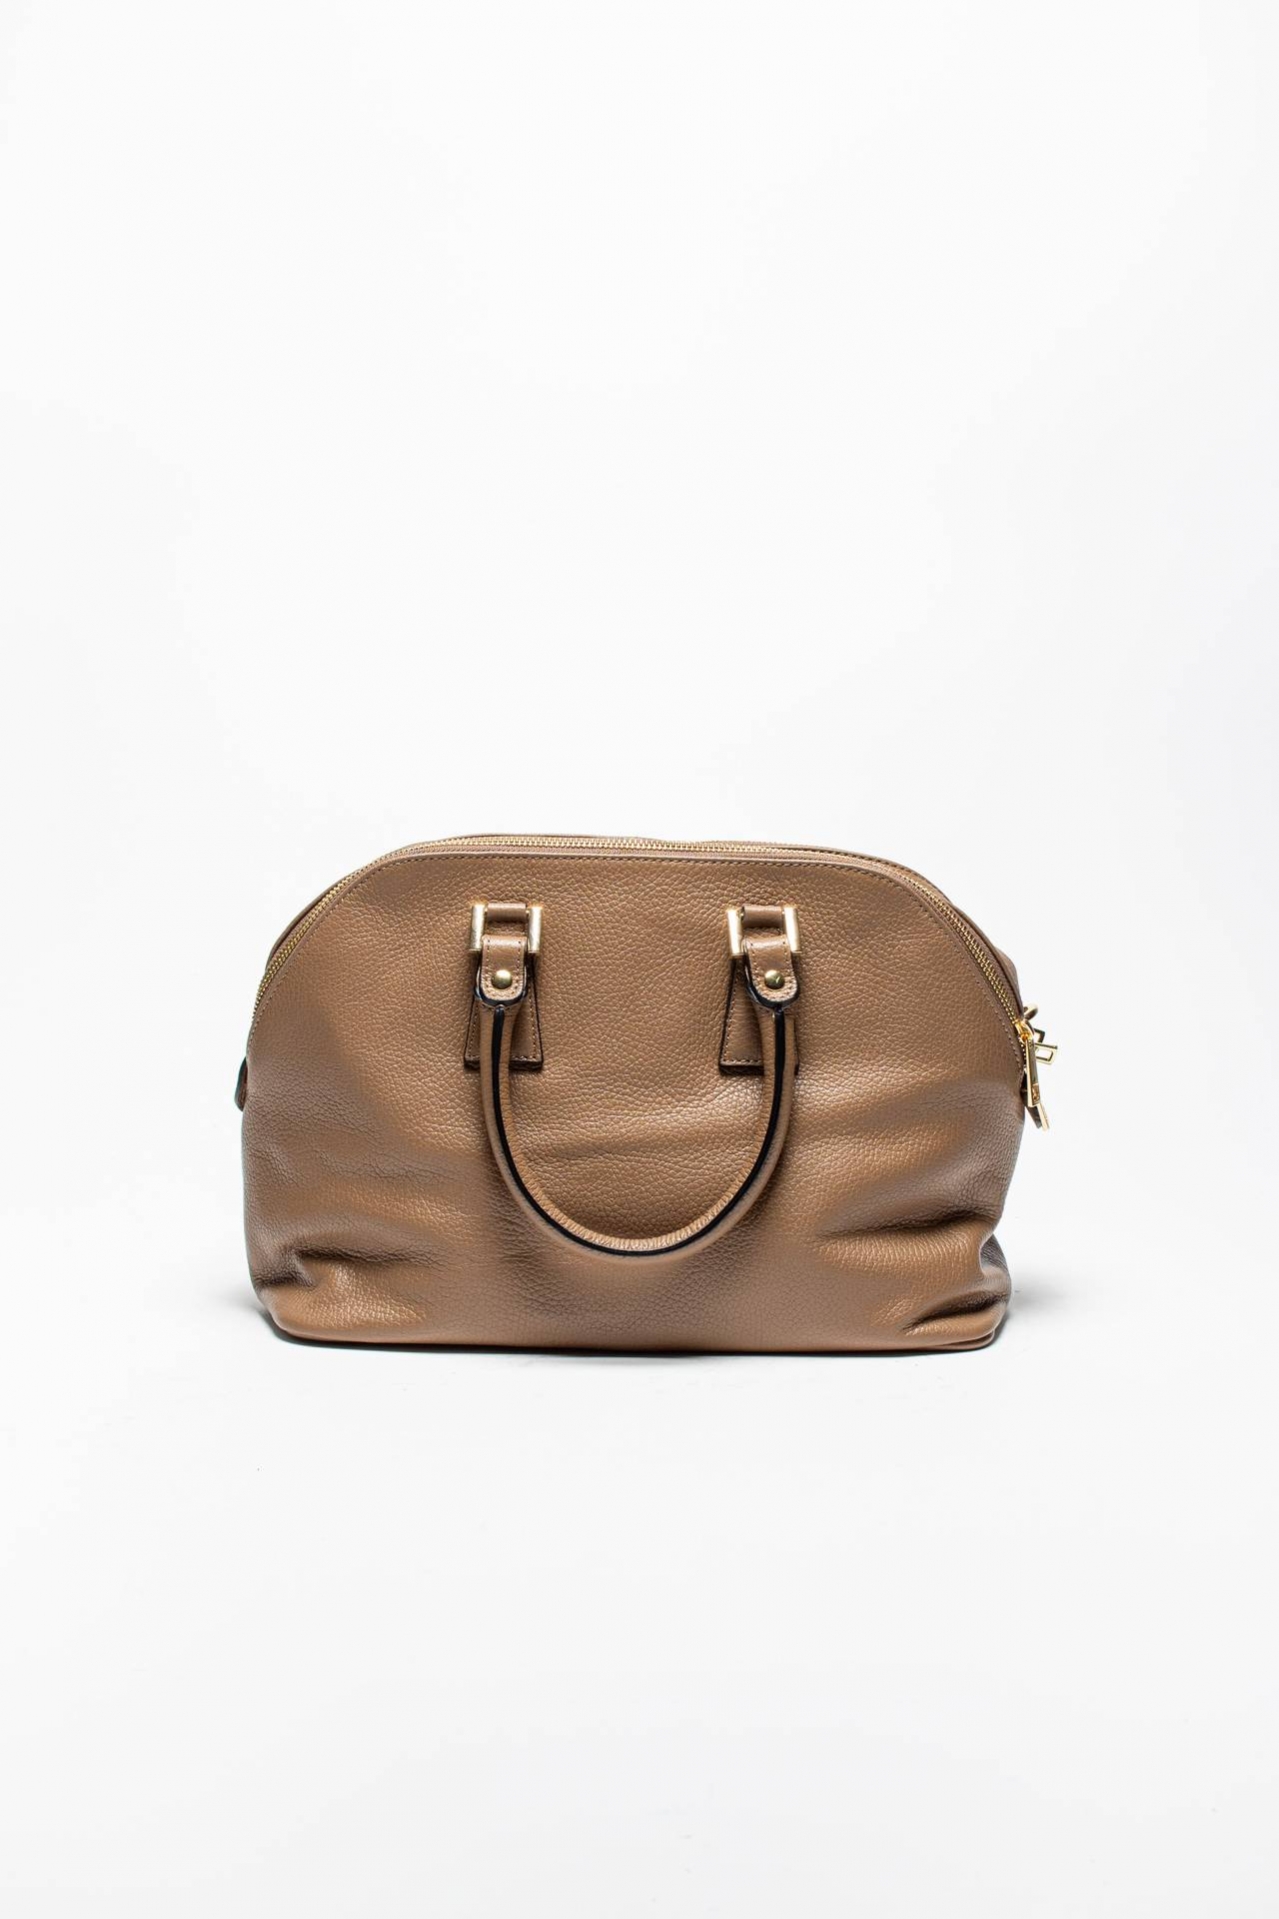 FANDANGO bag in leather